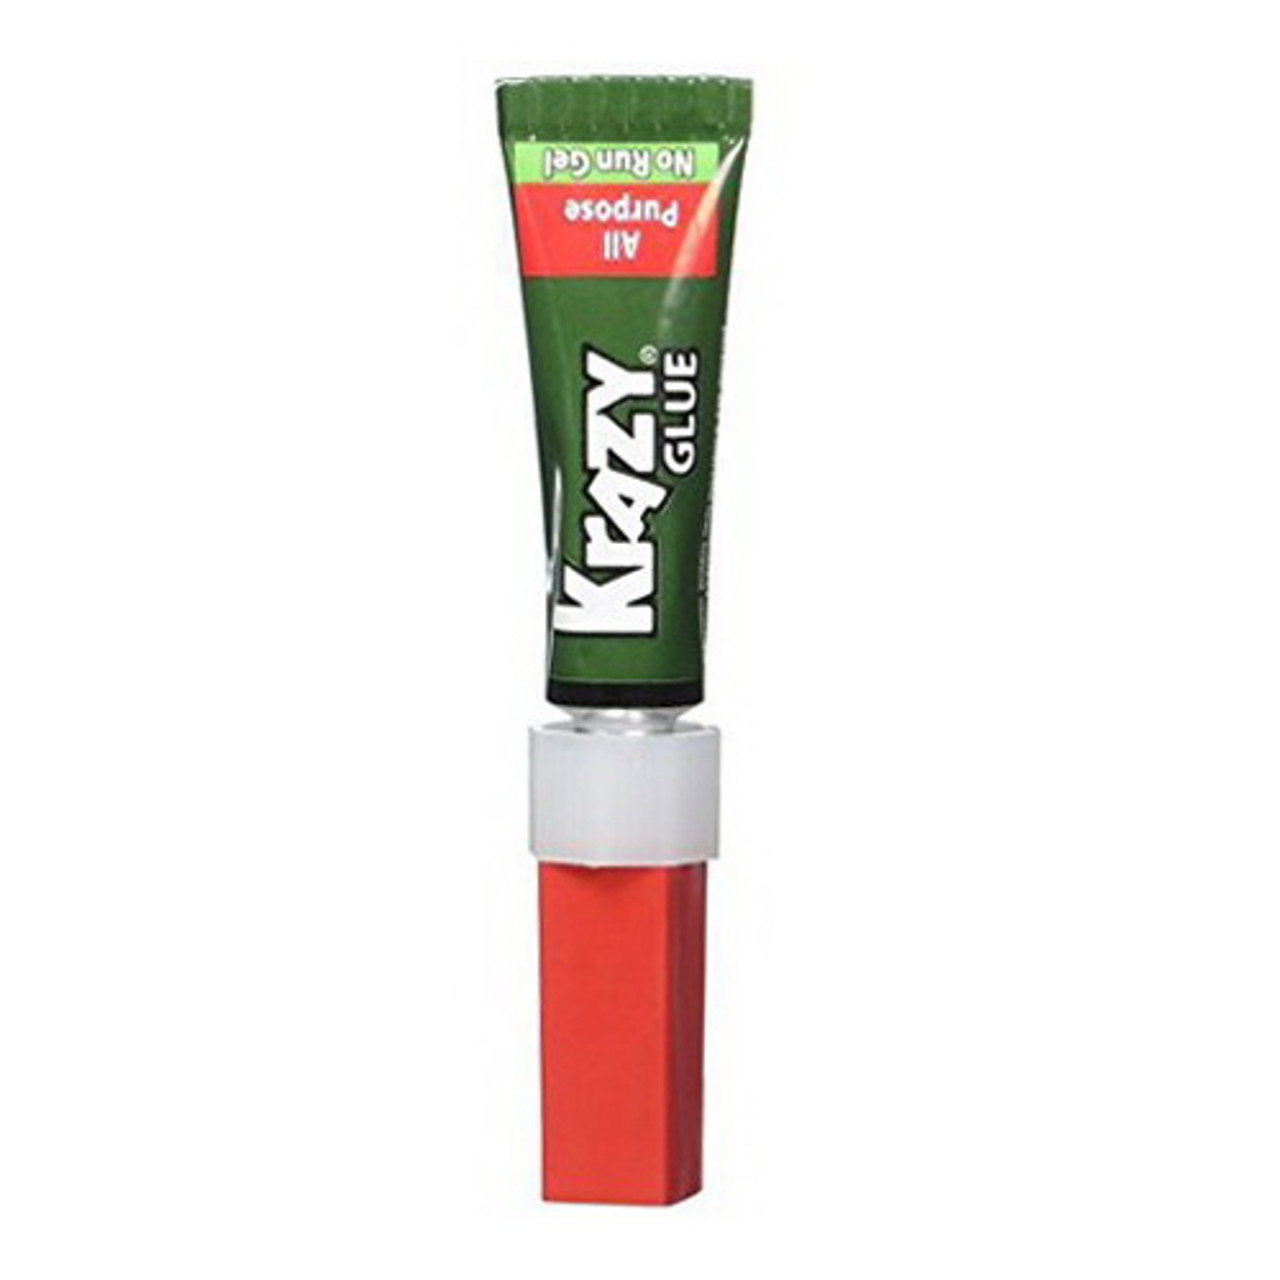 Krazy Glue All-Purpose Glues